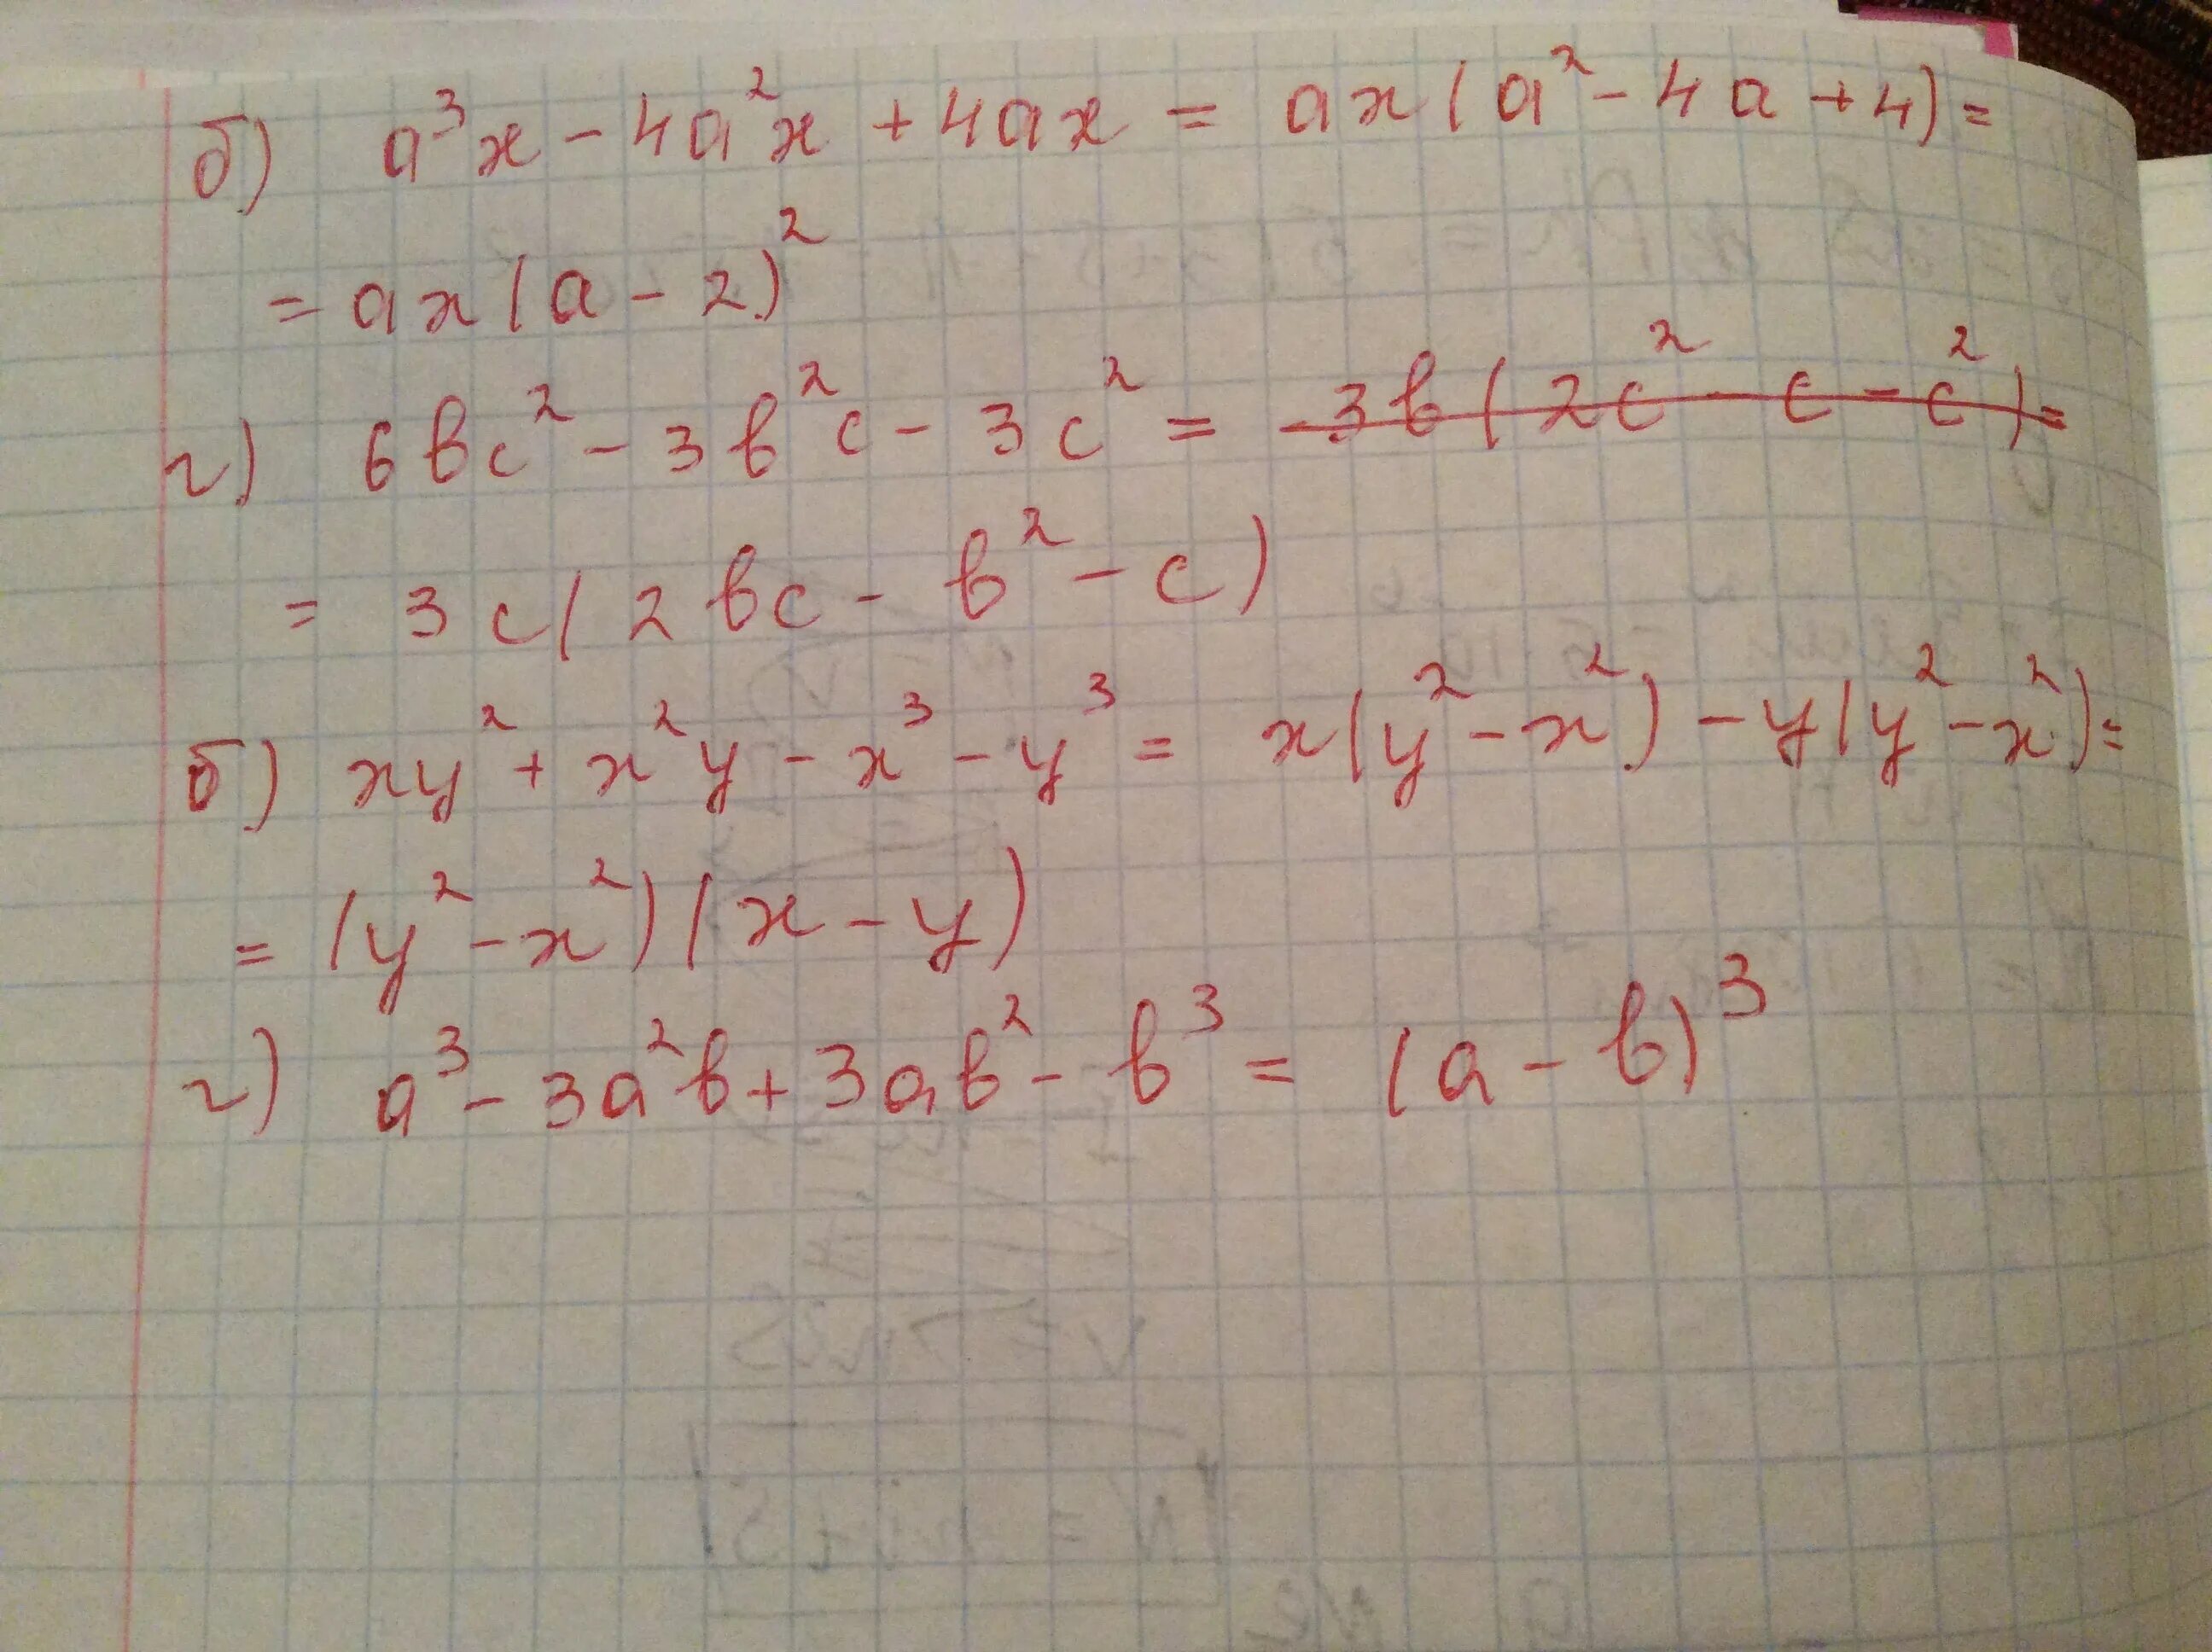 4x x 5 c. A*B*C 3x2y -0,5x3y2 2xy4. 2x^2-8 б 3/х-2. A2 4a 2 x2 AX 6 X три решения. Система x + 2y=1 x2 -XY-2x2=1.